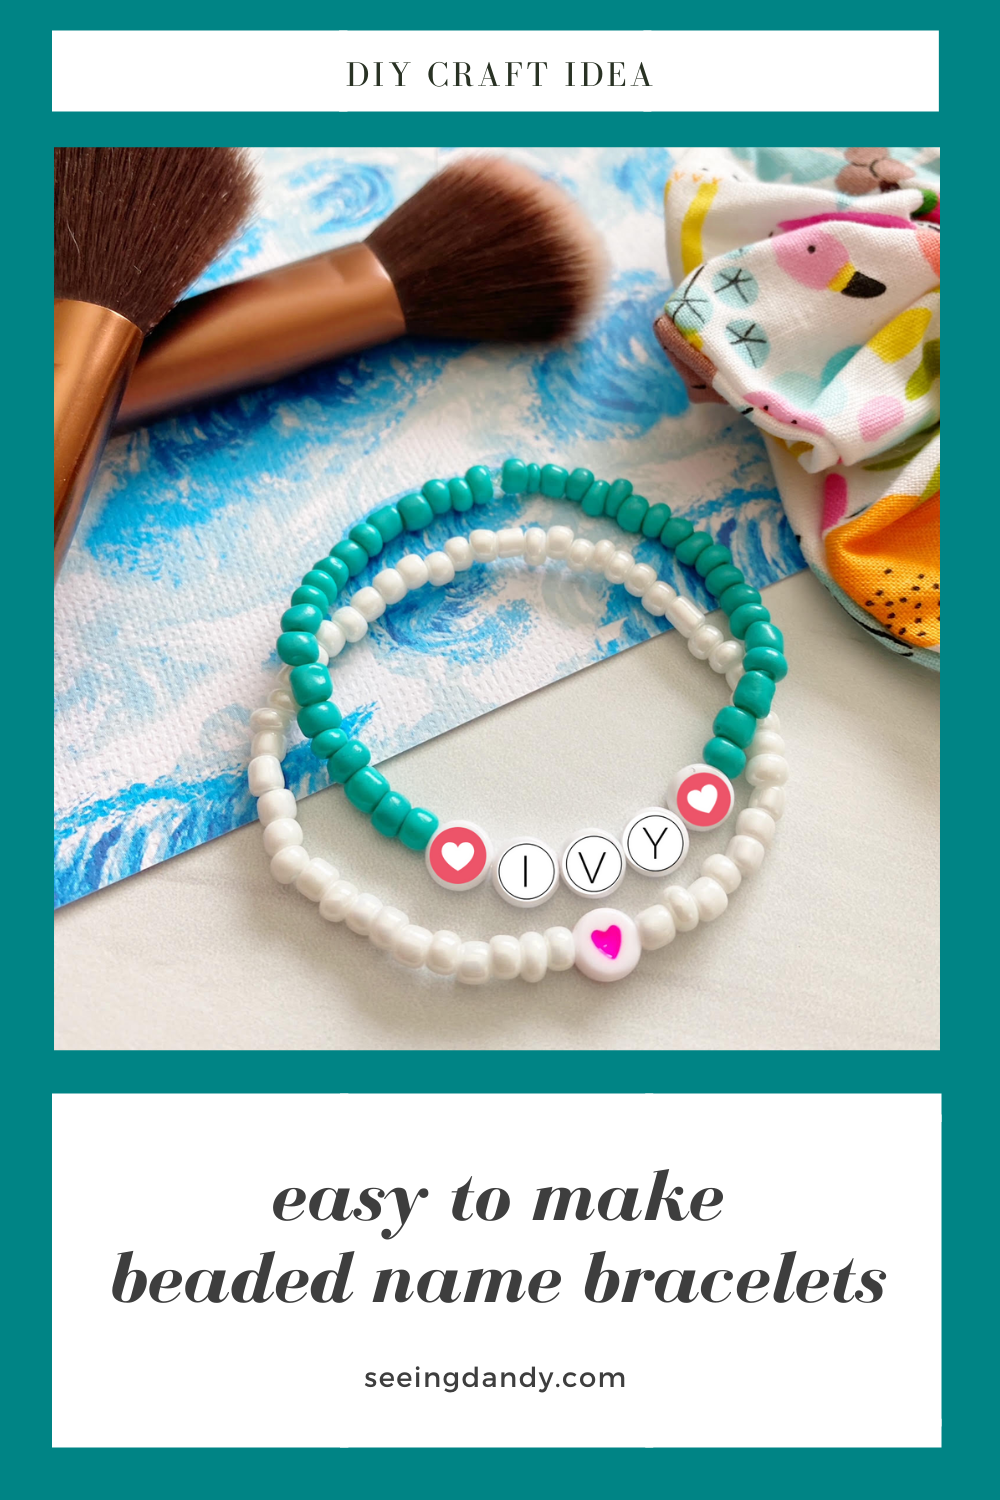 Beaded Alphabet Name Bracelets, kids crafts, easy crafts, diy craft idea, makeup brush, fabric scrunchie, turquoise bead bracelet, ivy name bracelet, heart beads, white coral bead bracelet